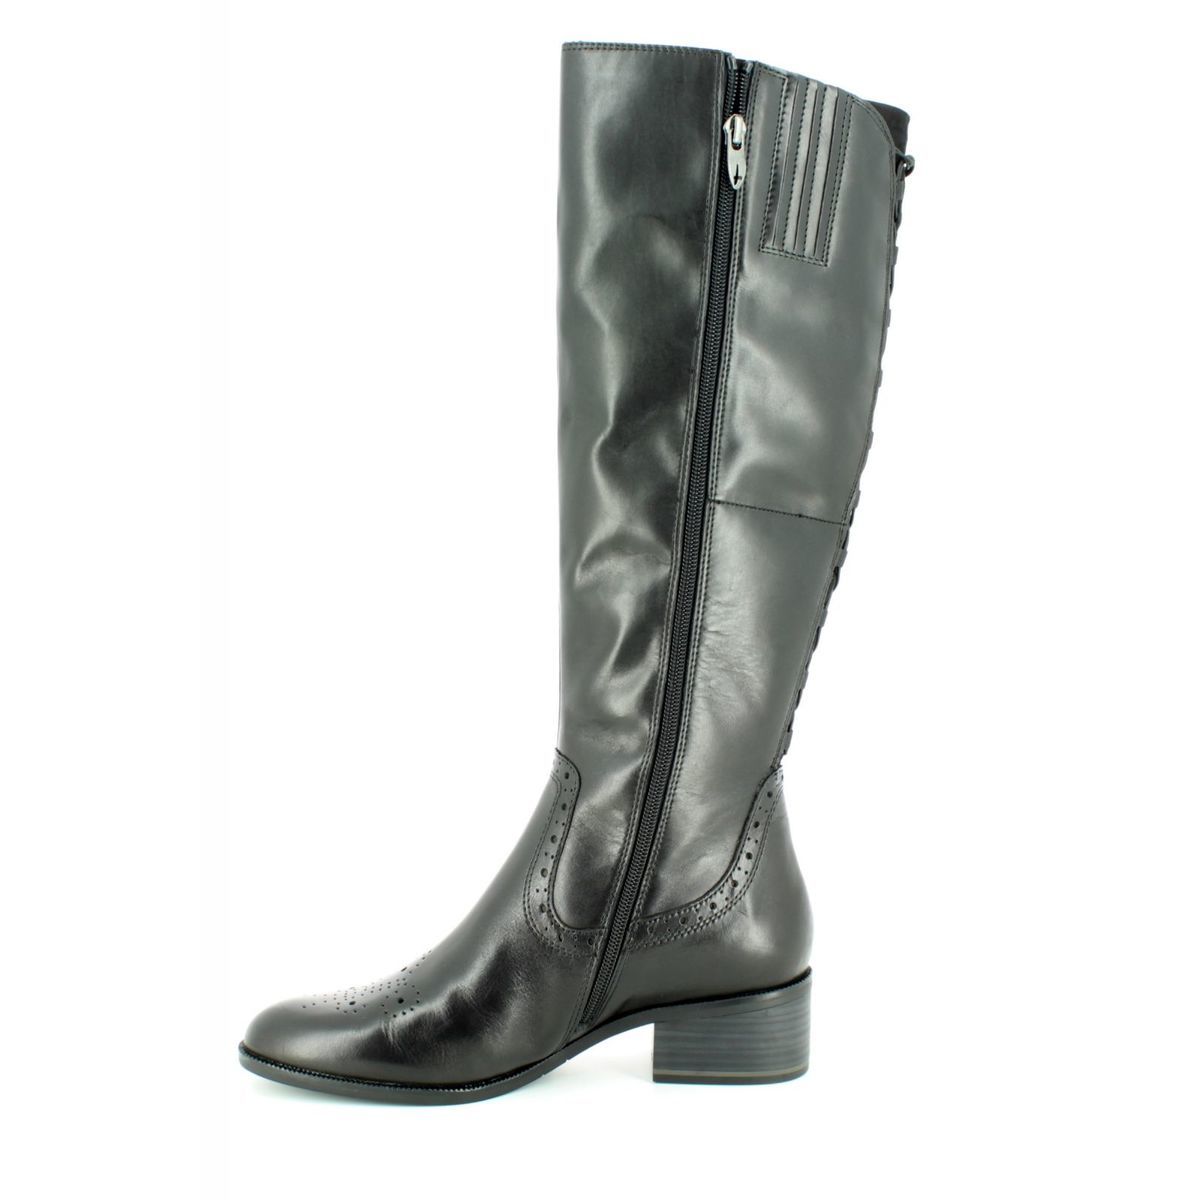 Tamaris Rosemary 25541-21-001 Black leather knee-high boots